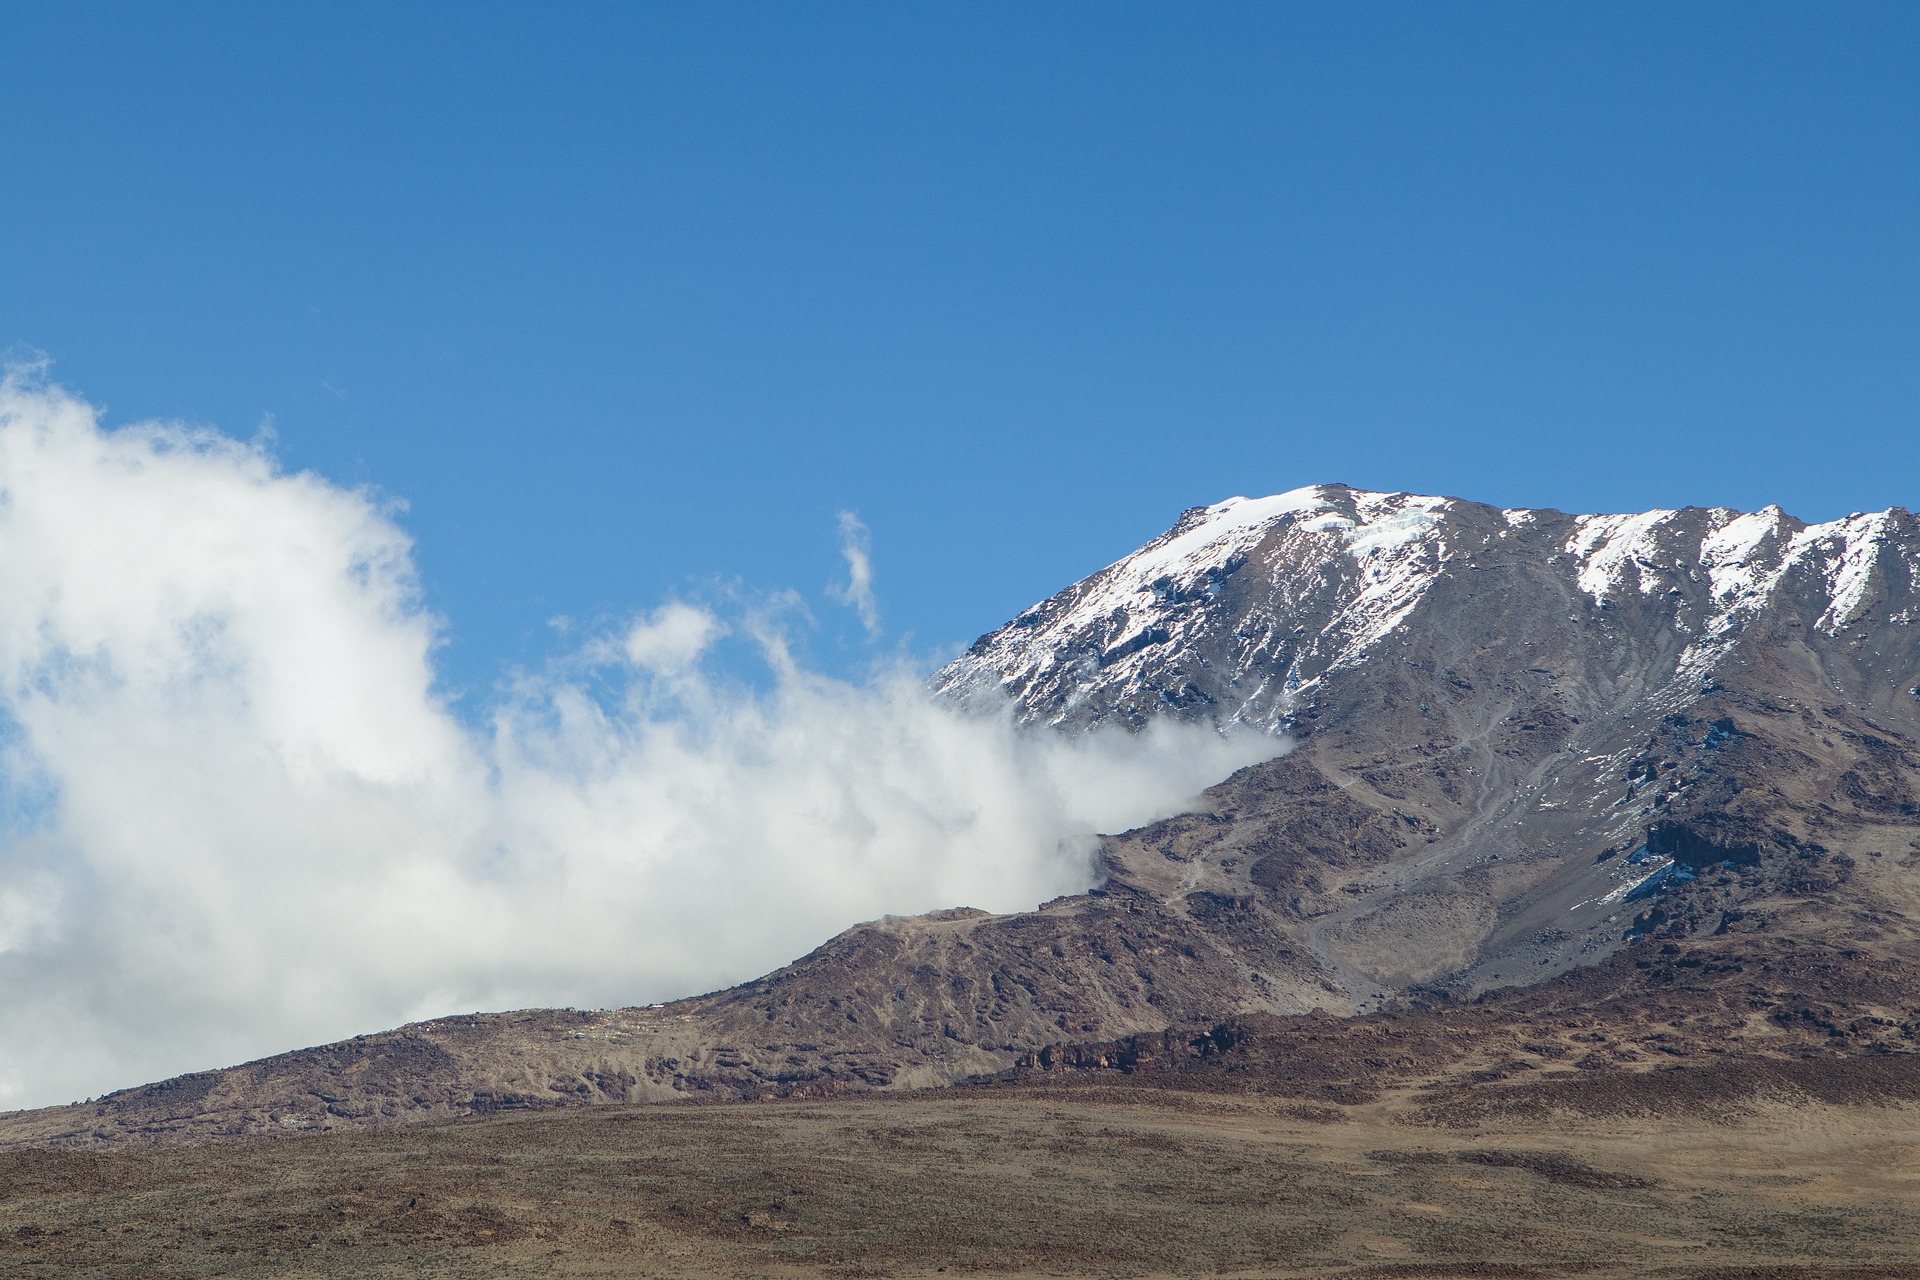 Mount Kilimanjaro Climbing Shira Route The Shira route